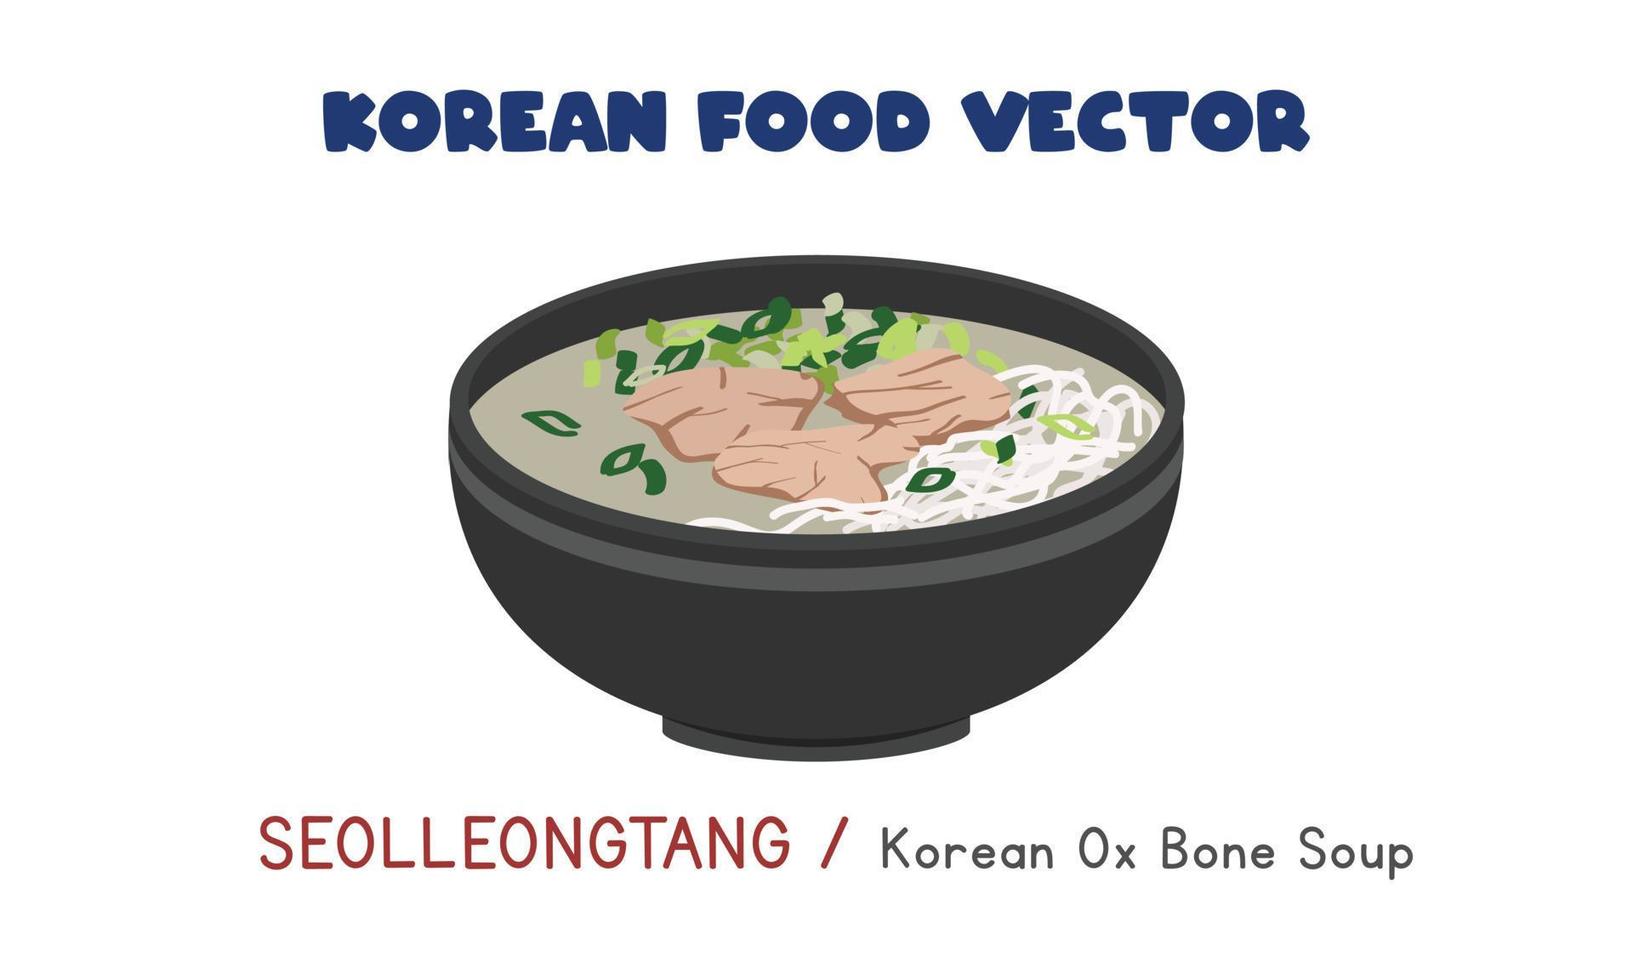 Korean Seolleongtang - Korean Ox Bone Soup flat vector design illustration, clipart cartoon style. Asian food. Korean cuisine. Korean food